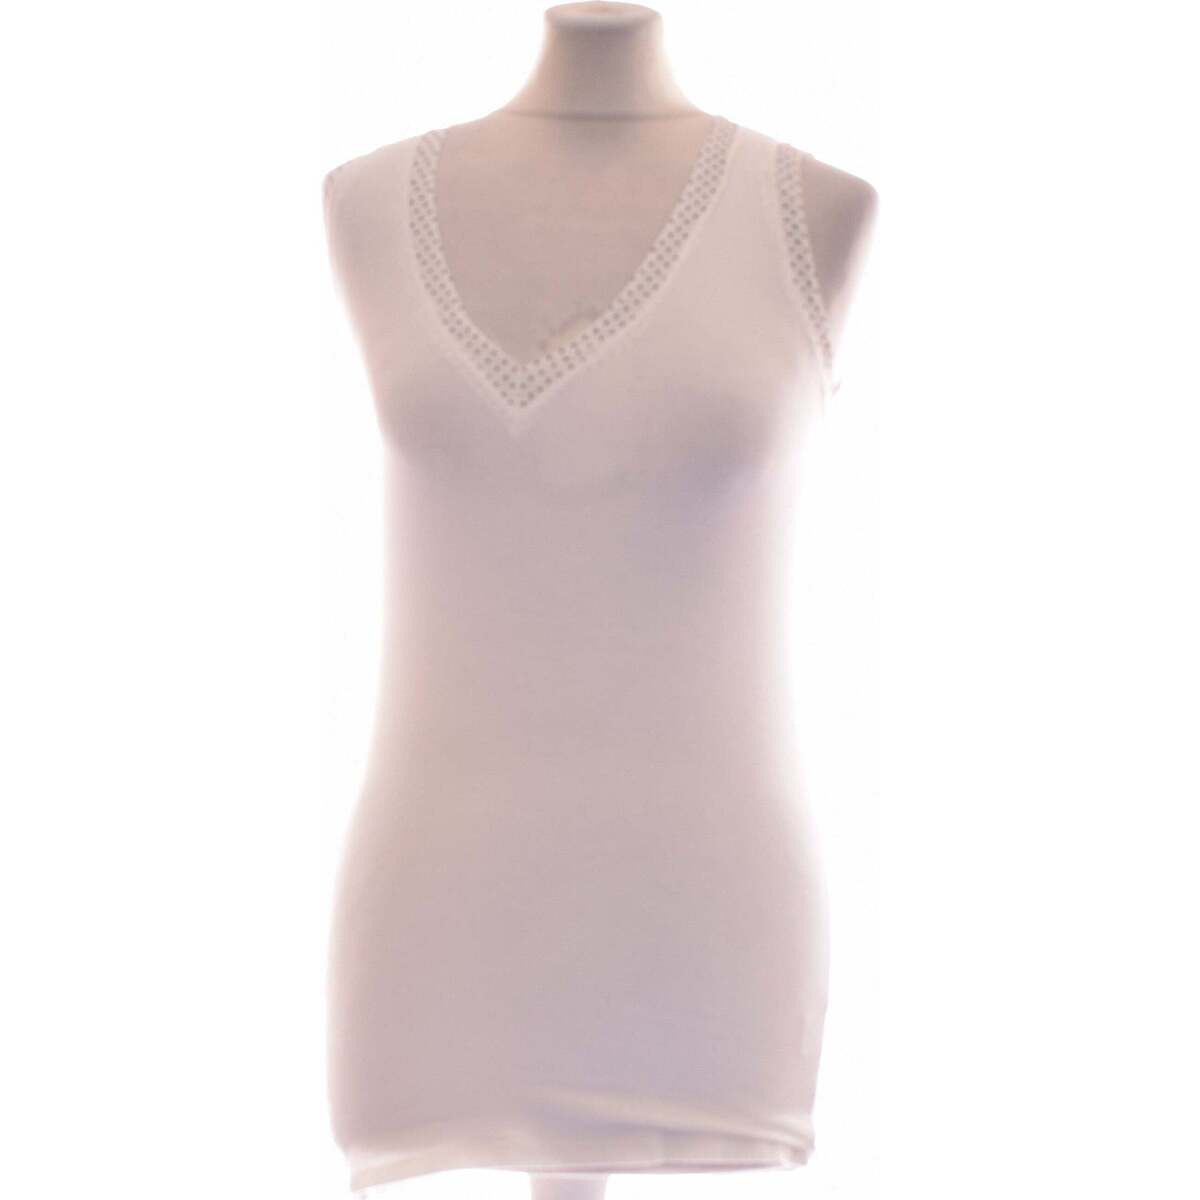 Vêtements Femme heavier weight than a normal T shirt débardeur  34 - T0 - XS Blanc Blanc